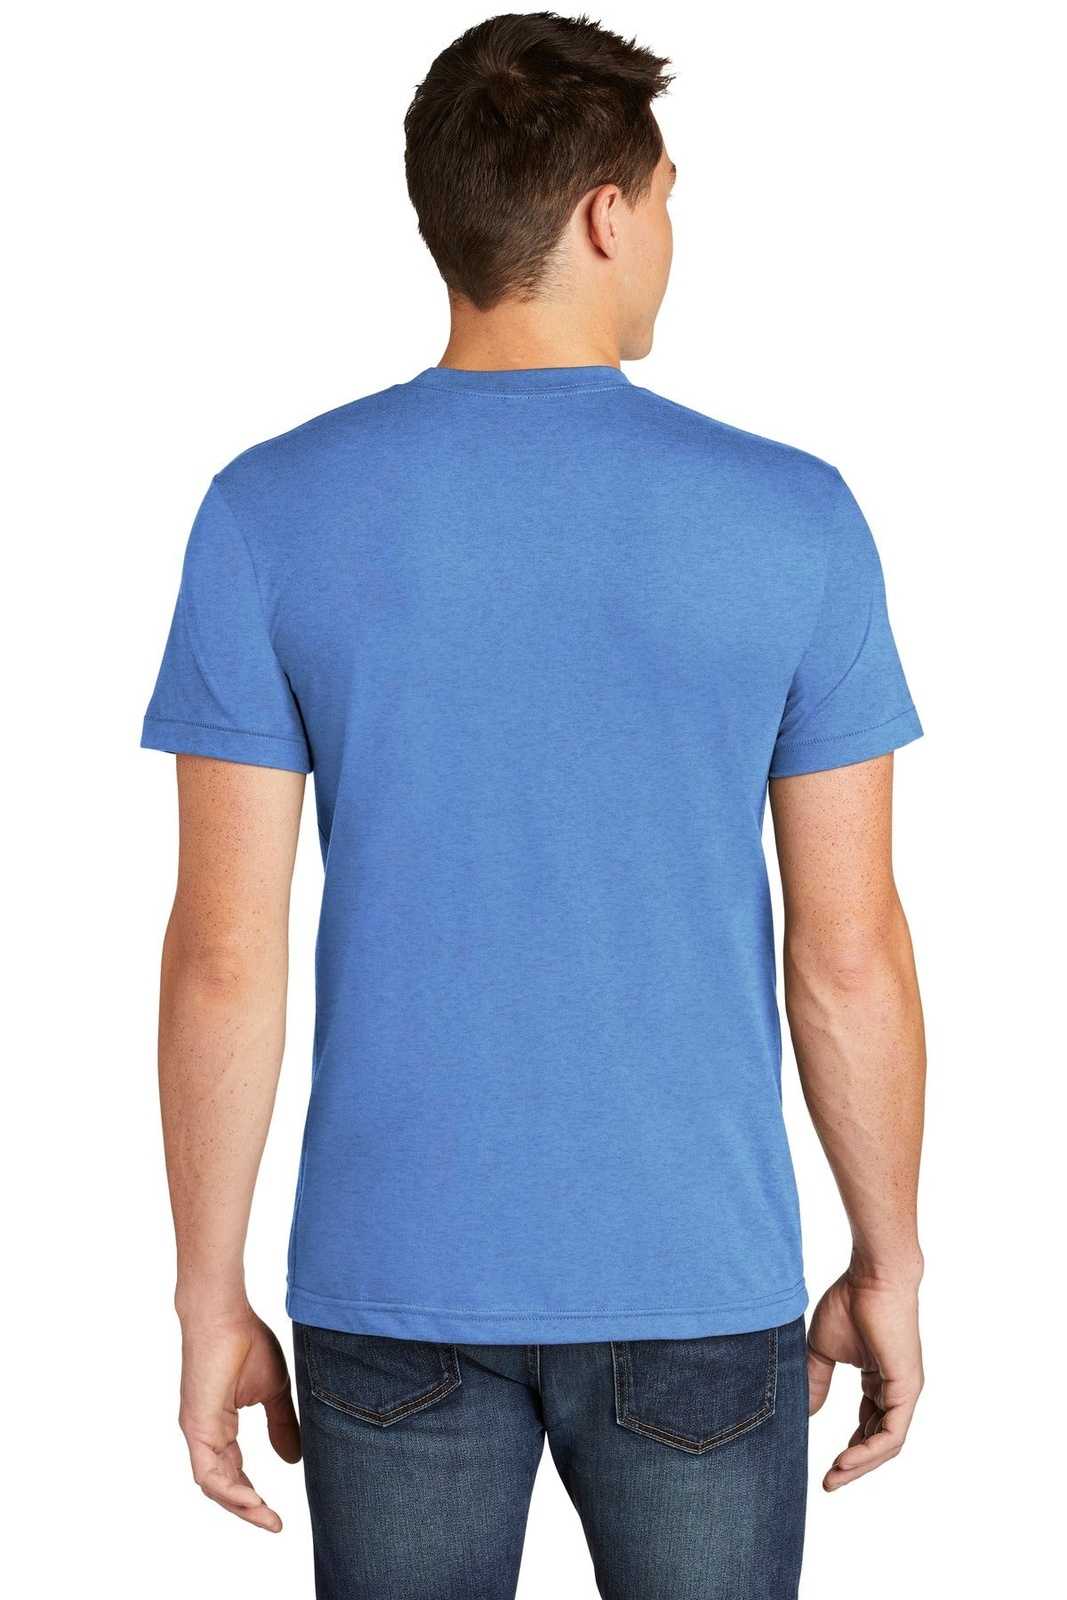 American Apparel BB401W Poly-Cotton T-Shirt - Heather Lake Blue - HIT a Double